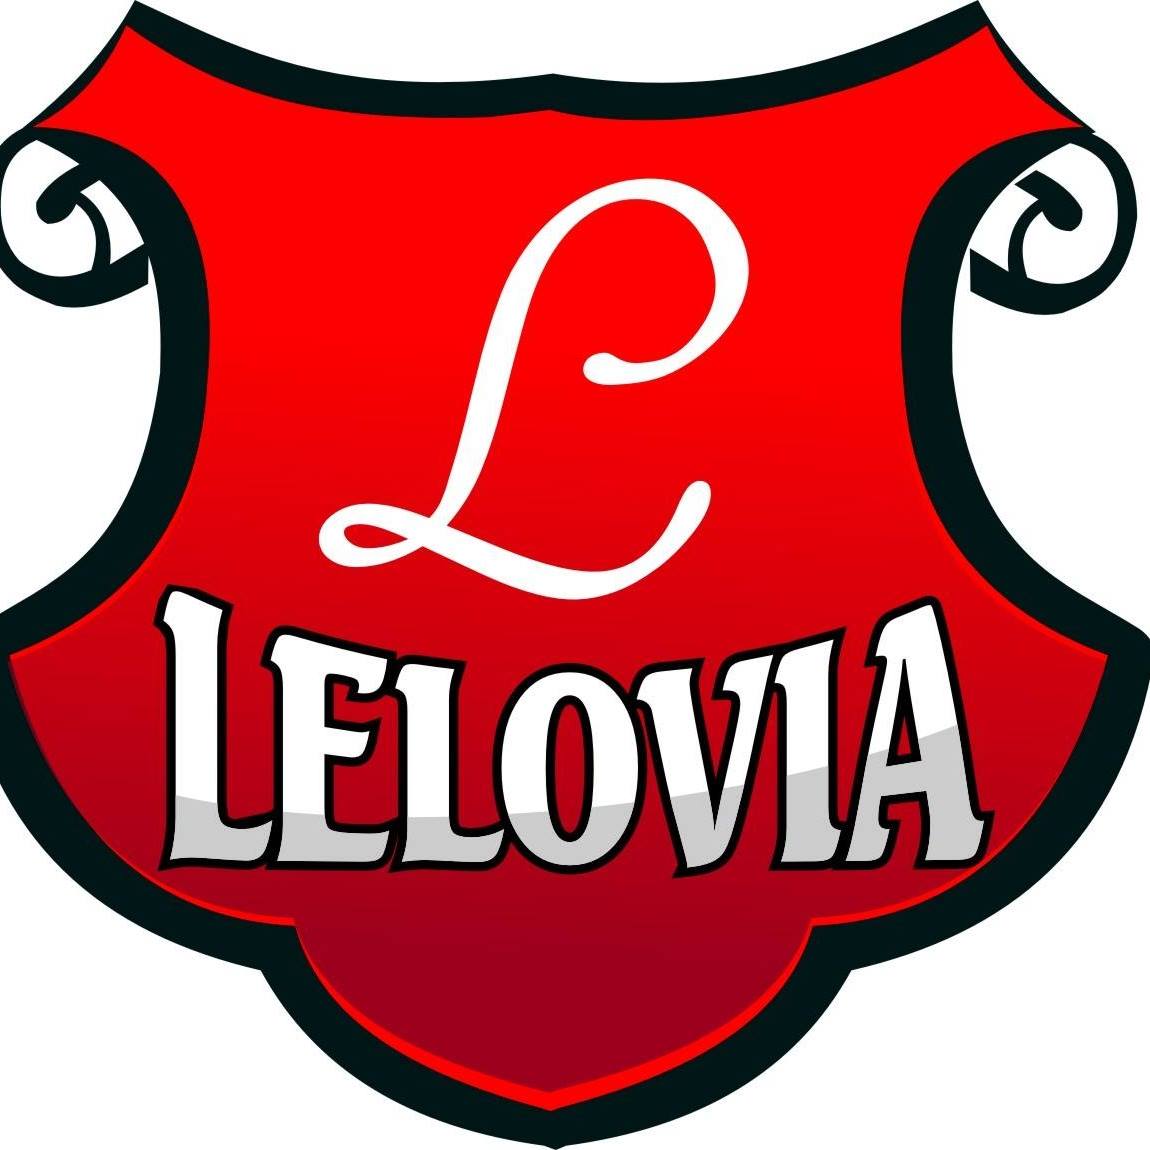 LELOVIA LELOW